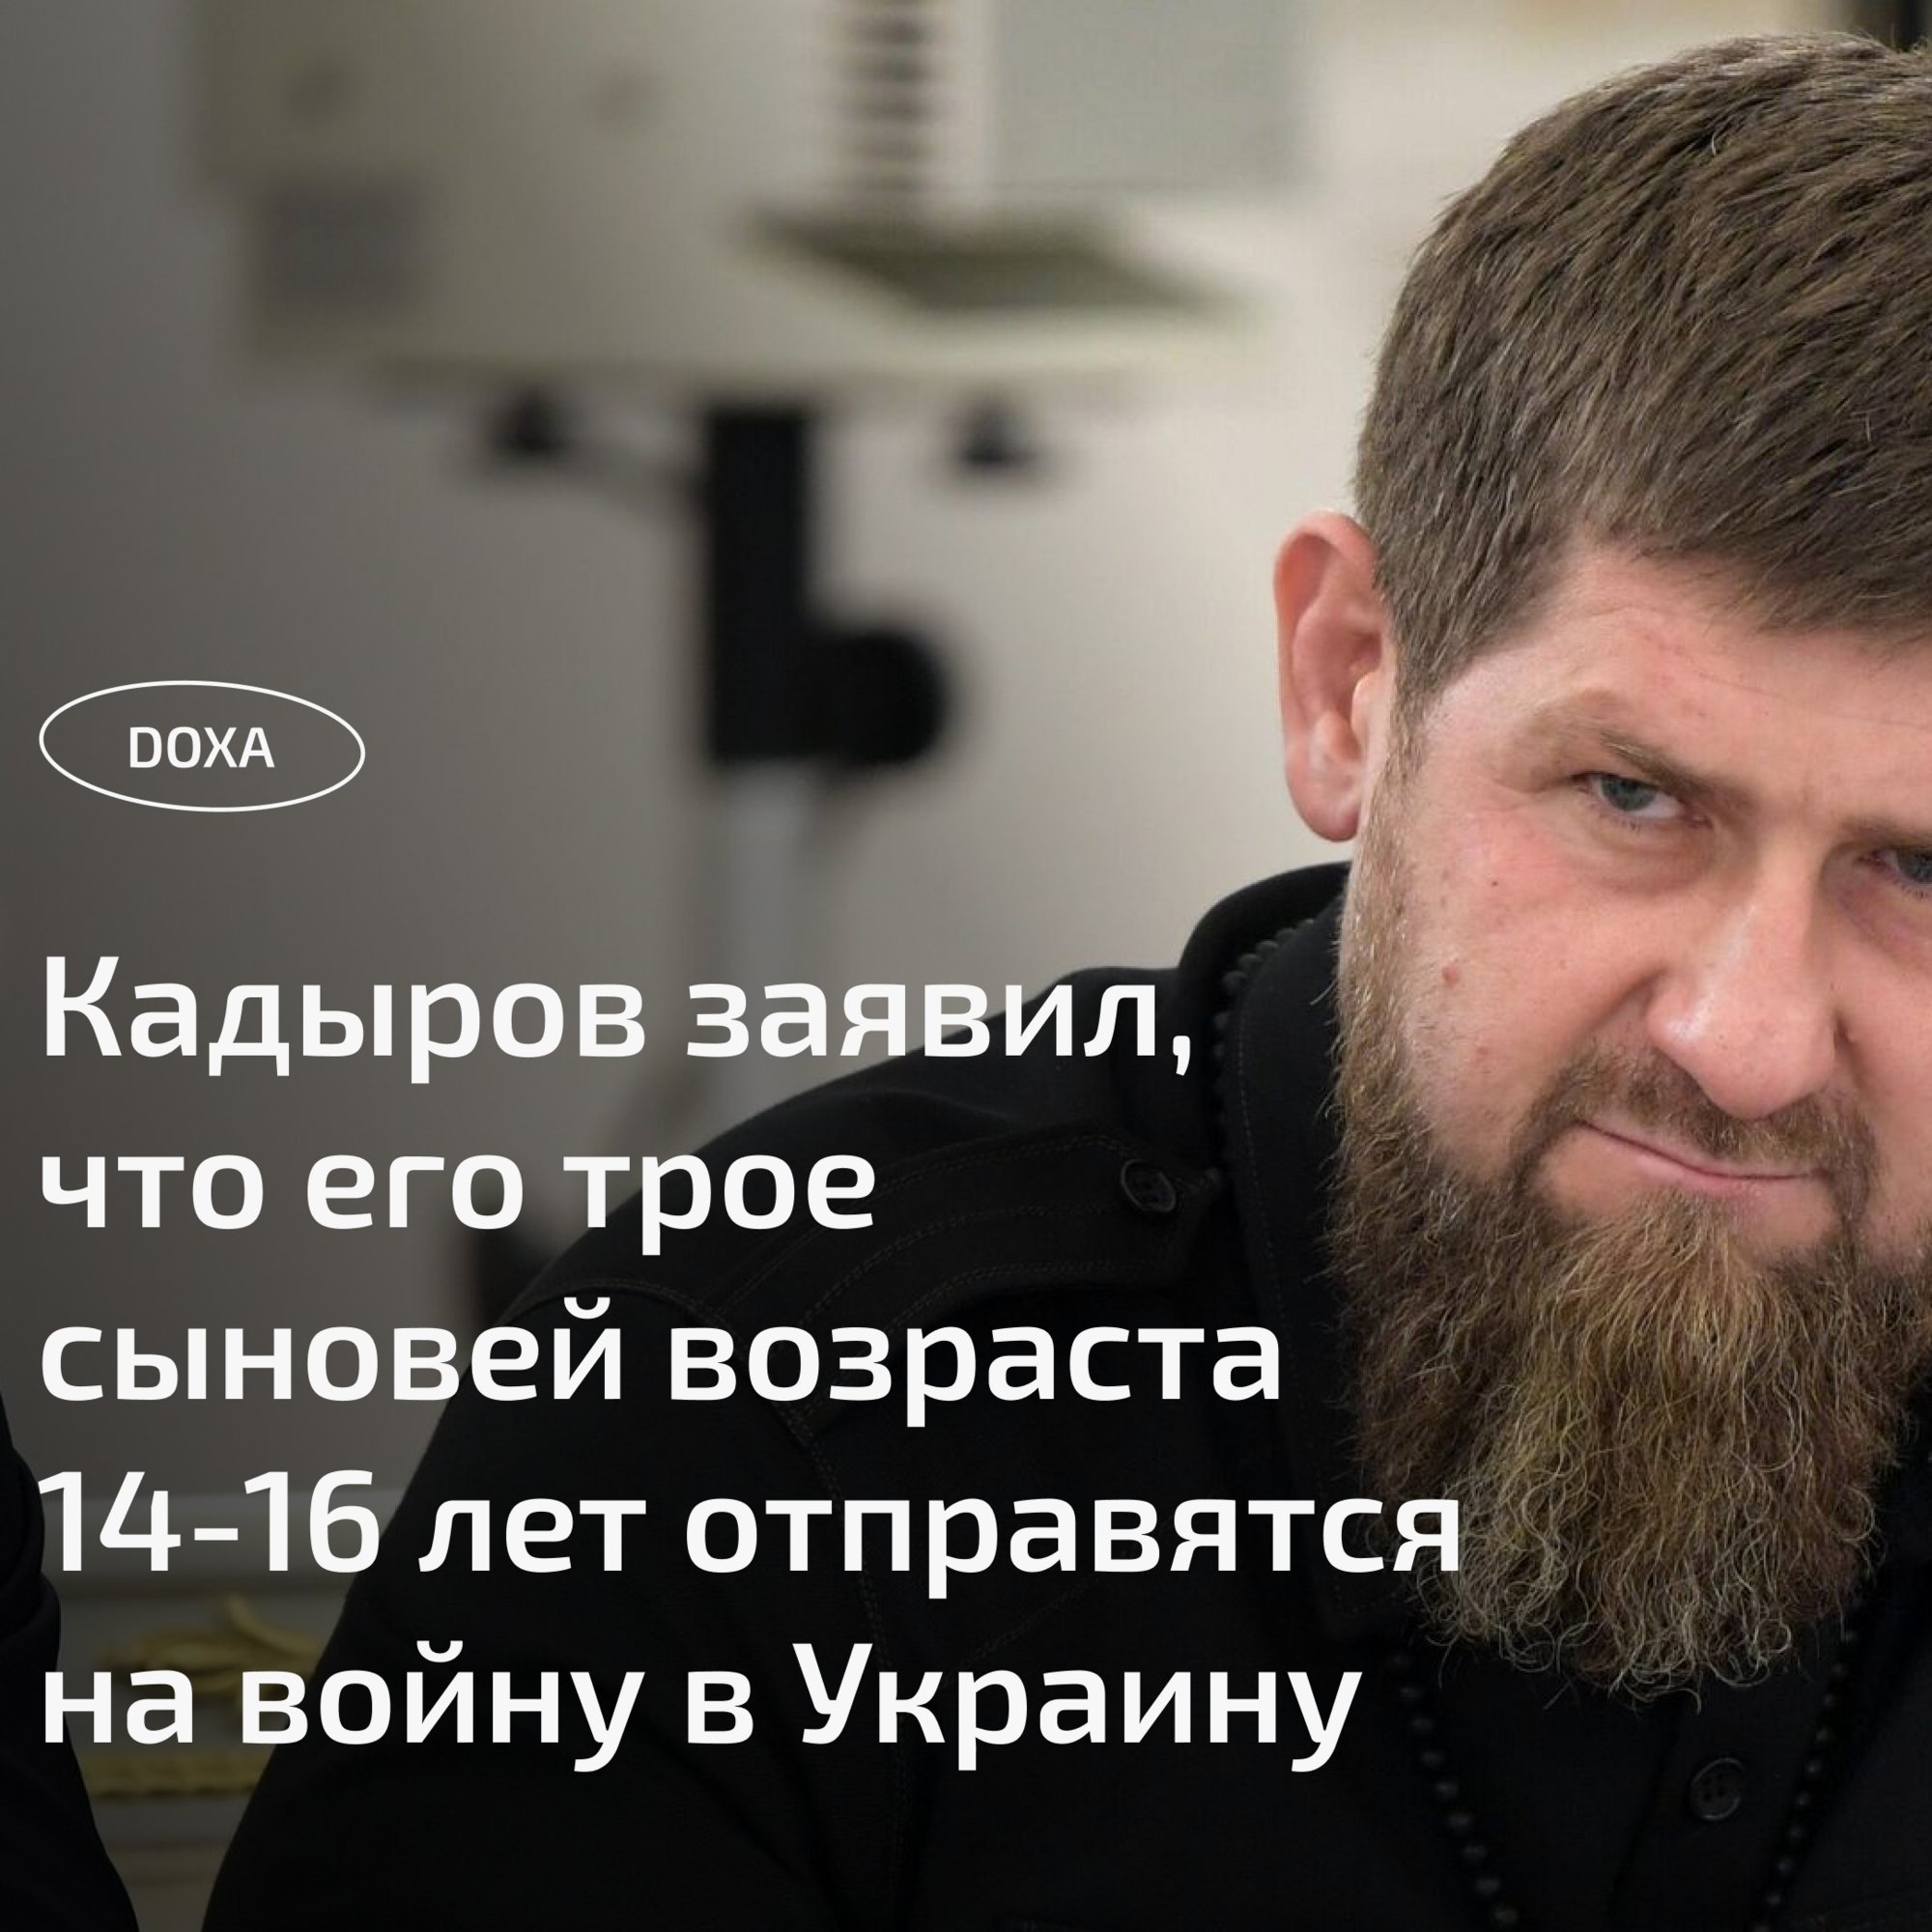 Чеченец Рамзан Кадыров